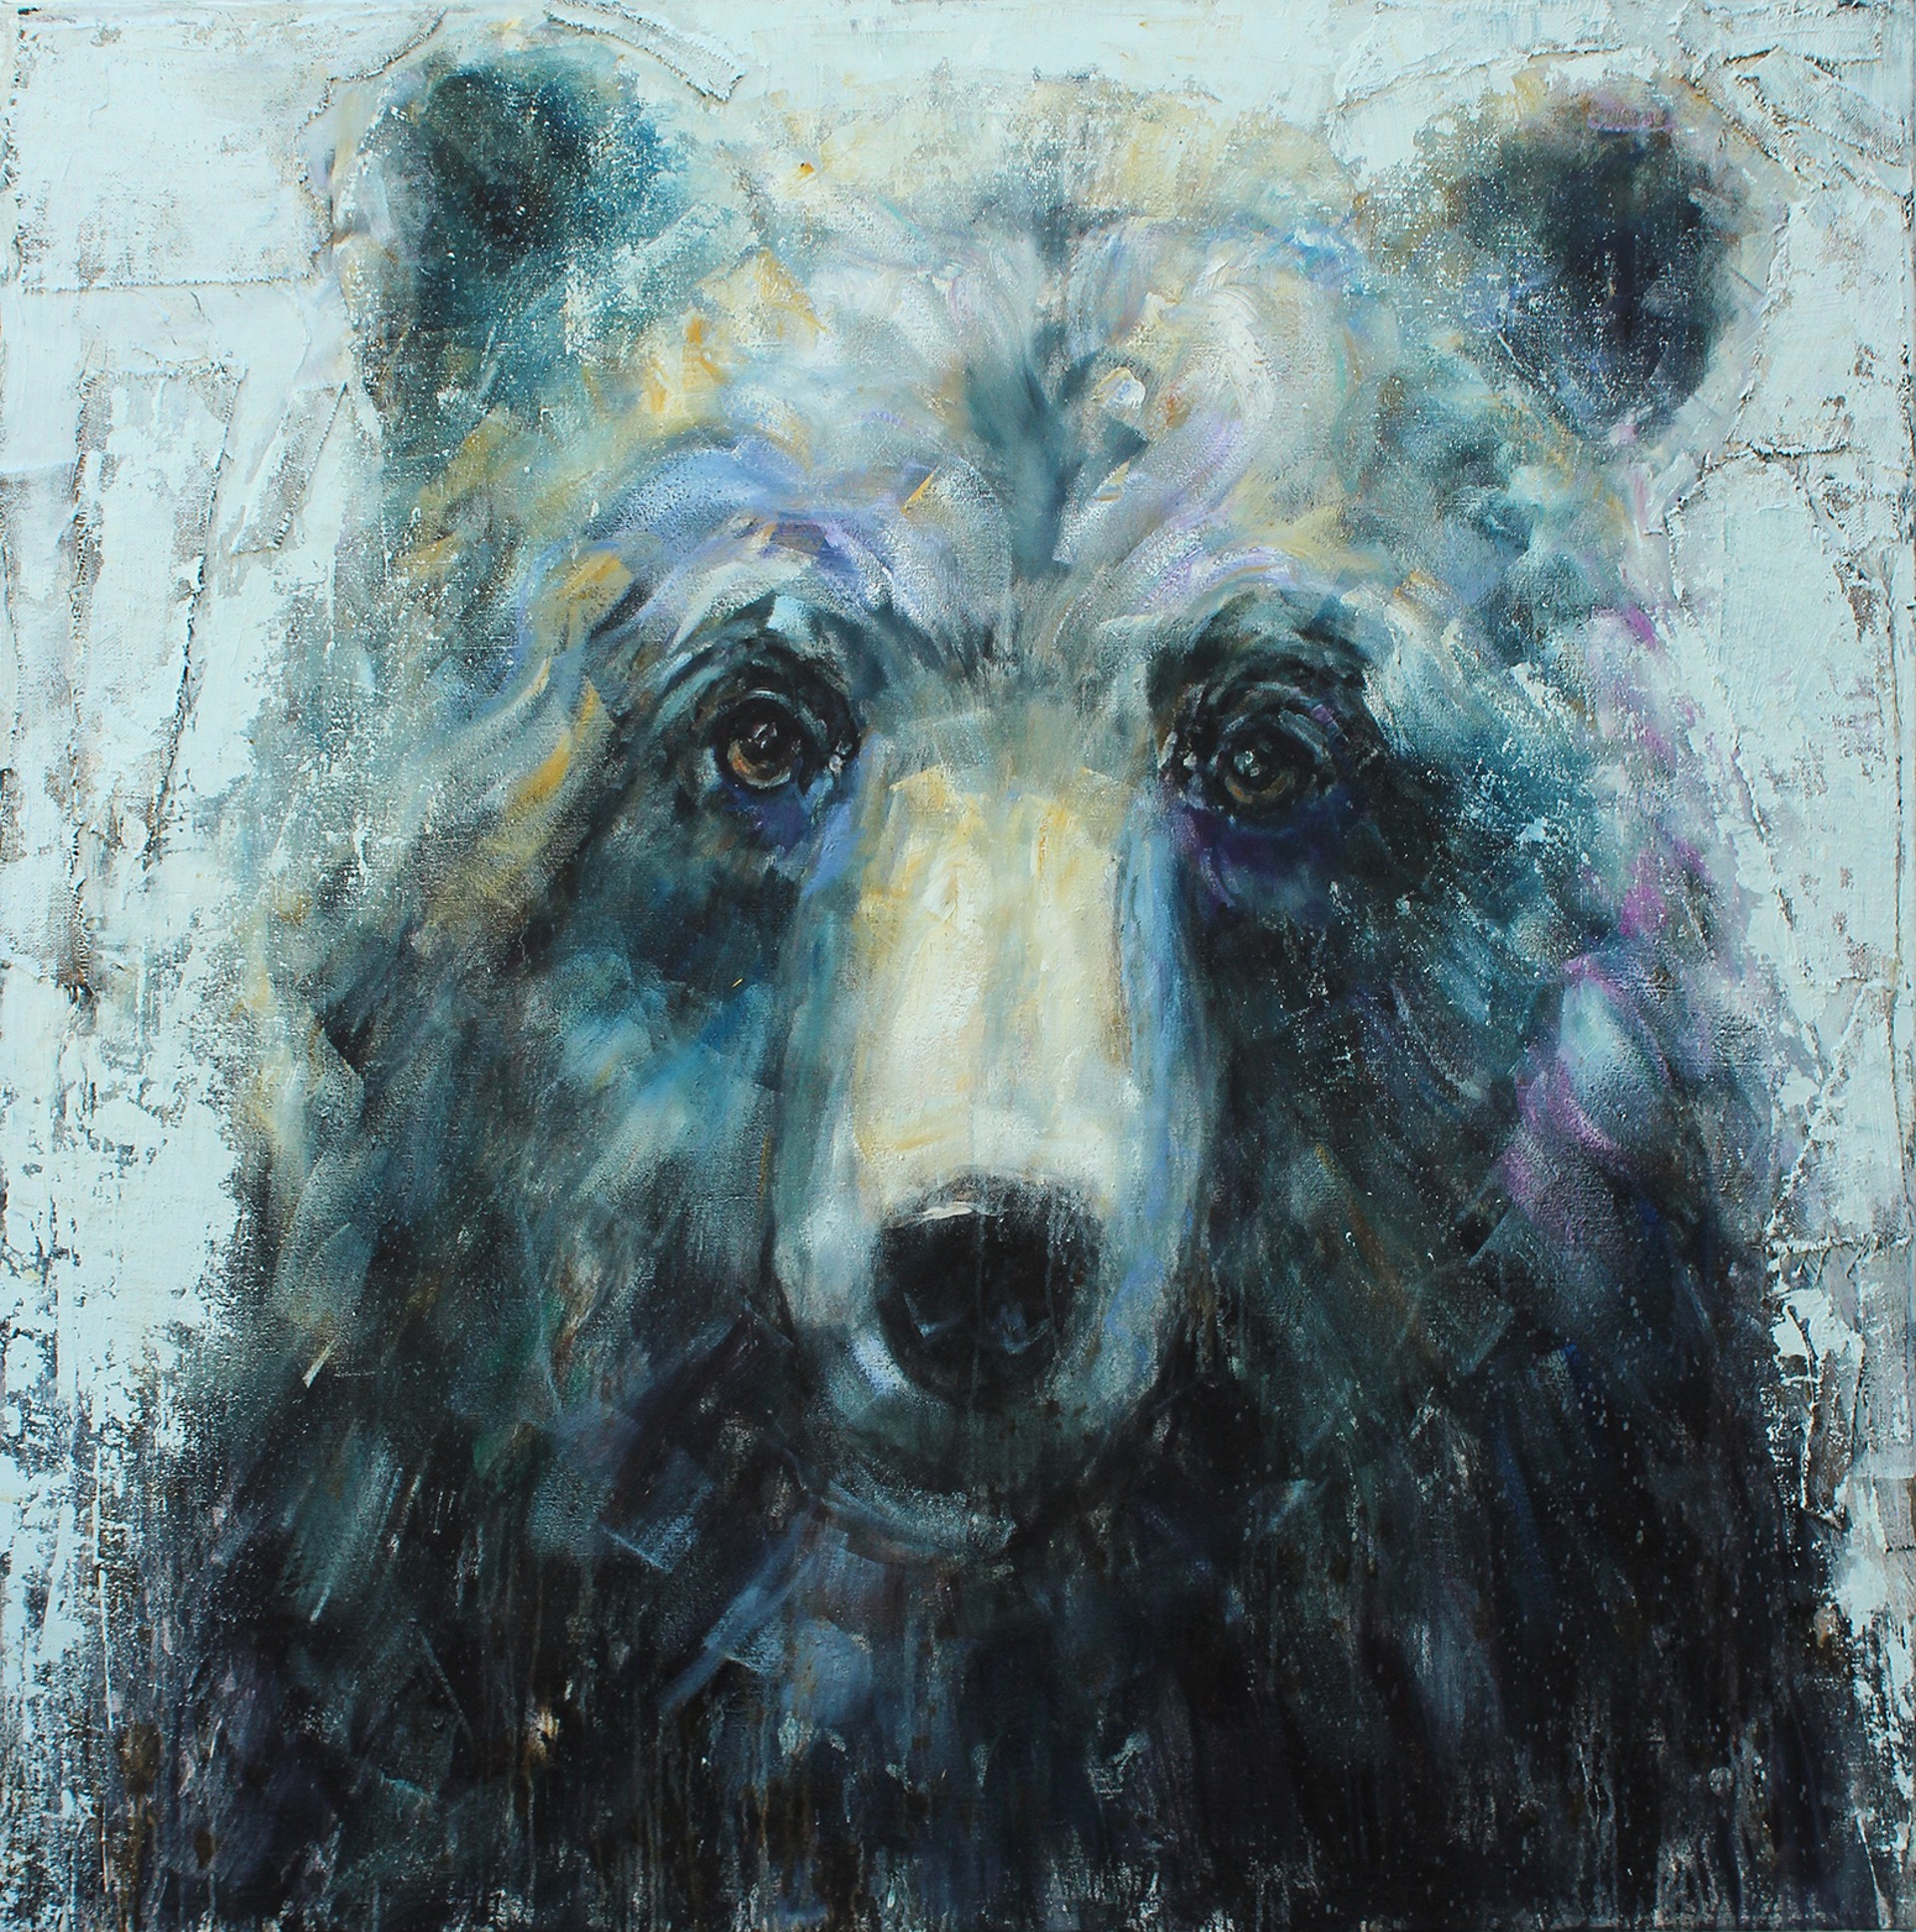 Big Bear by Matt Flint